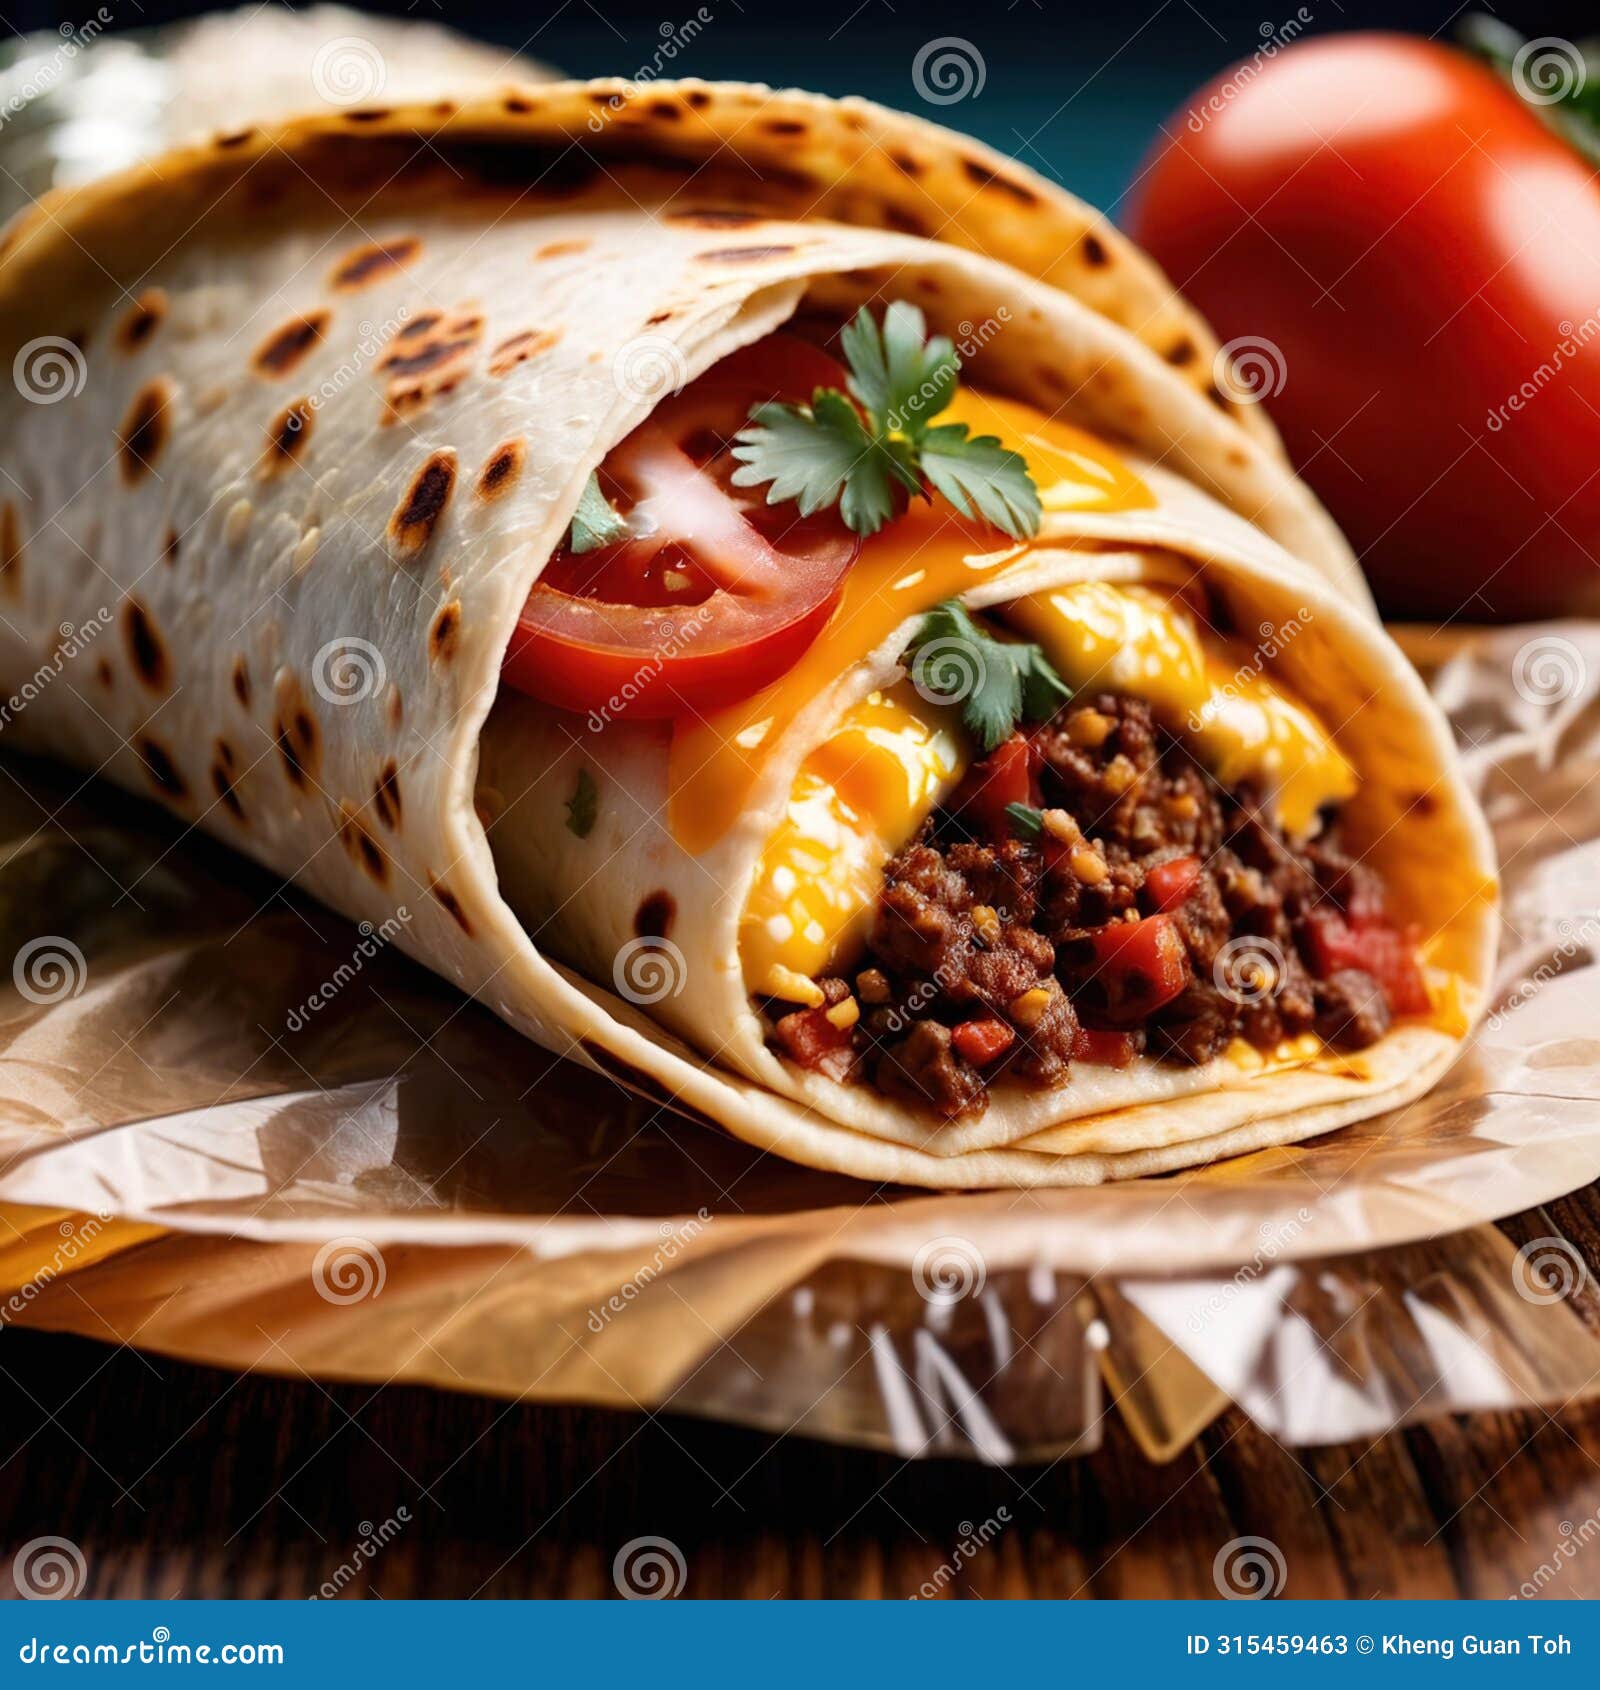 breakfast burrito, mexican american breakfast food, convenient wrap